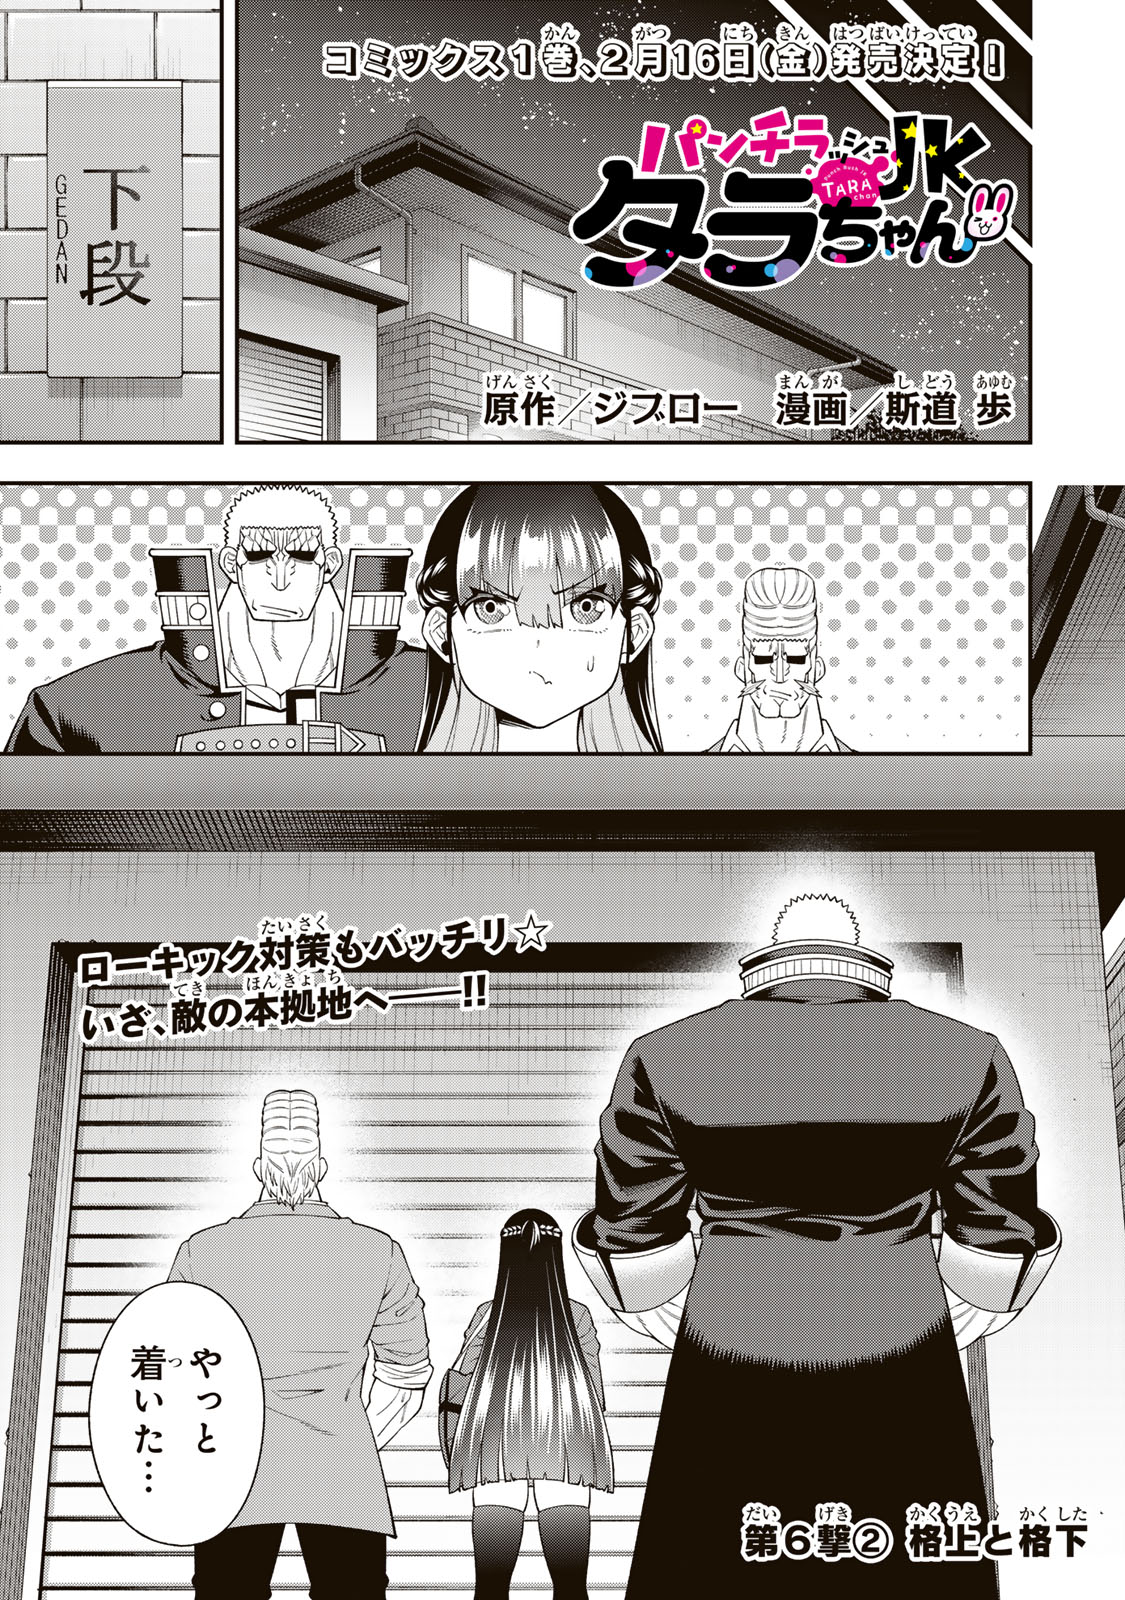 Punch Rush JK Tara-chan - Chapter 6.2 - Page 1